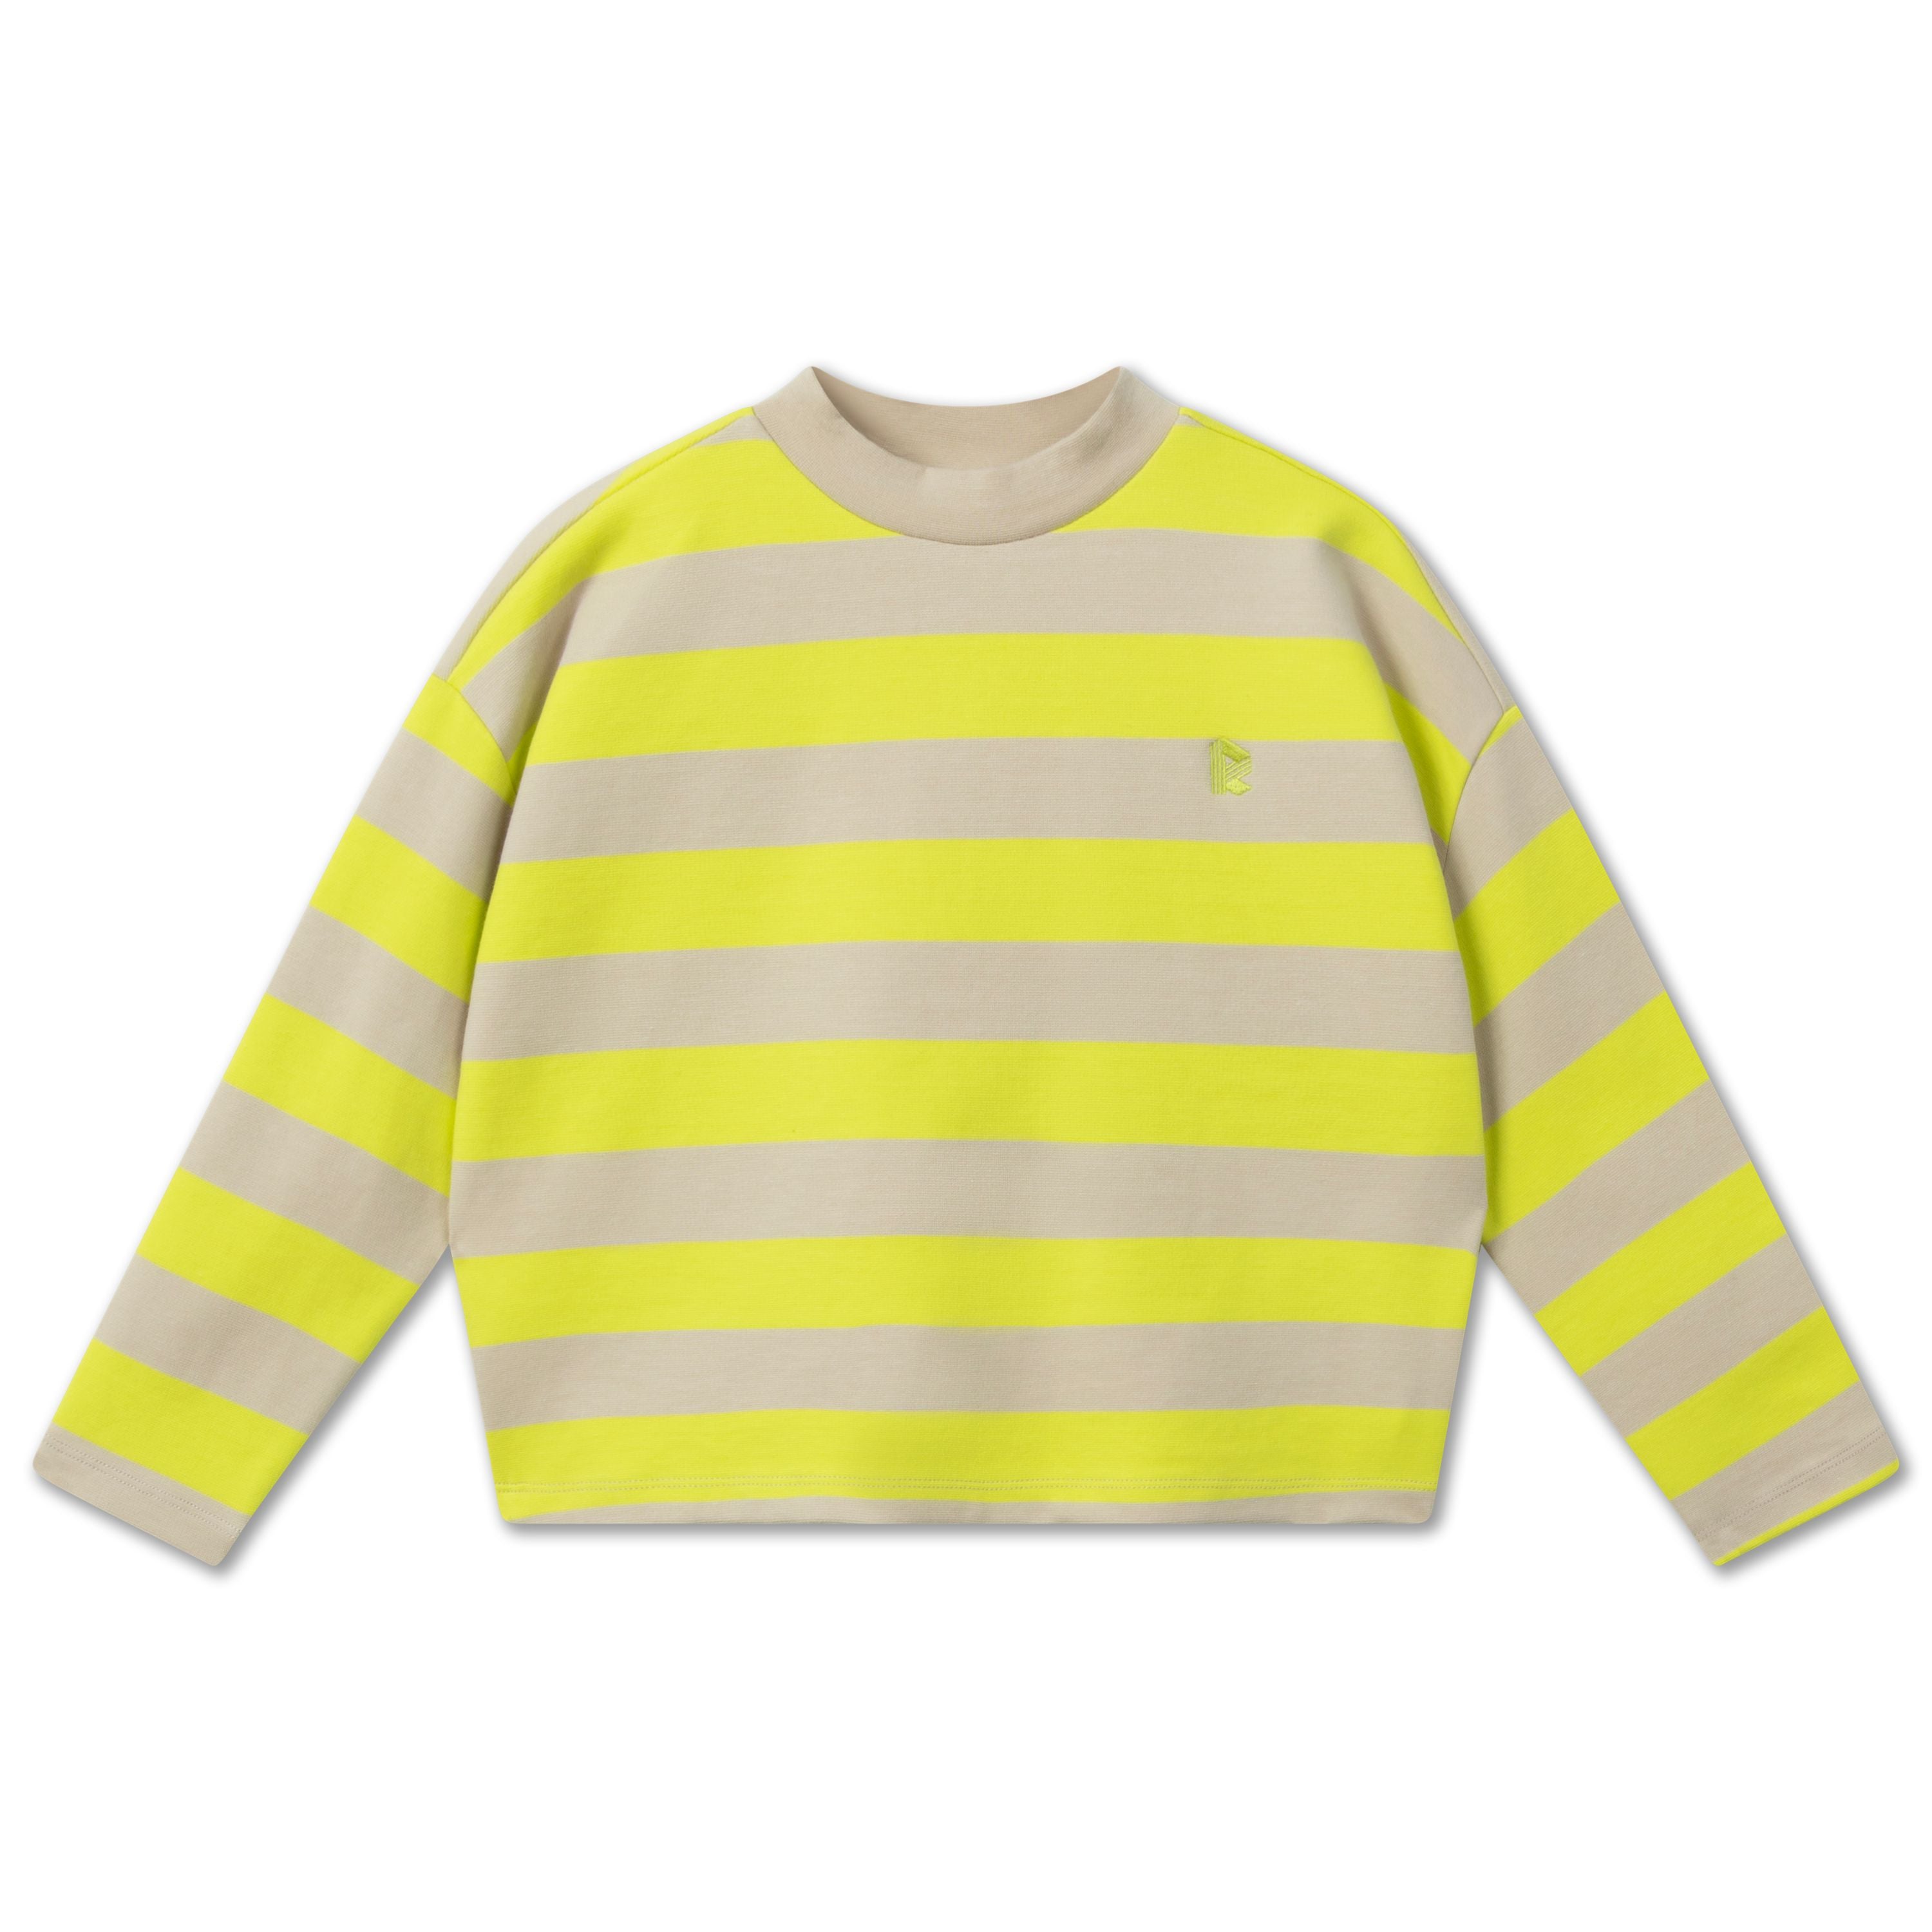 Repose ams - oversized boxy sweatshirt - neon lime sand